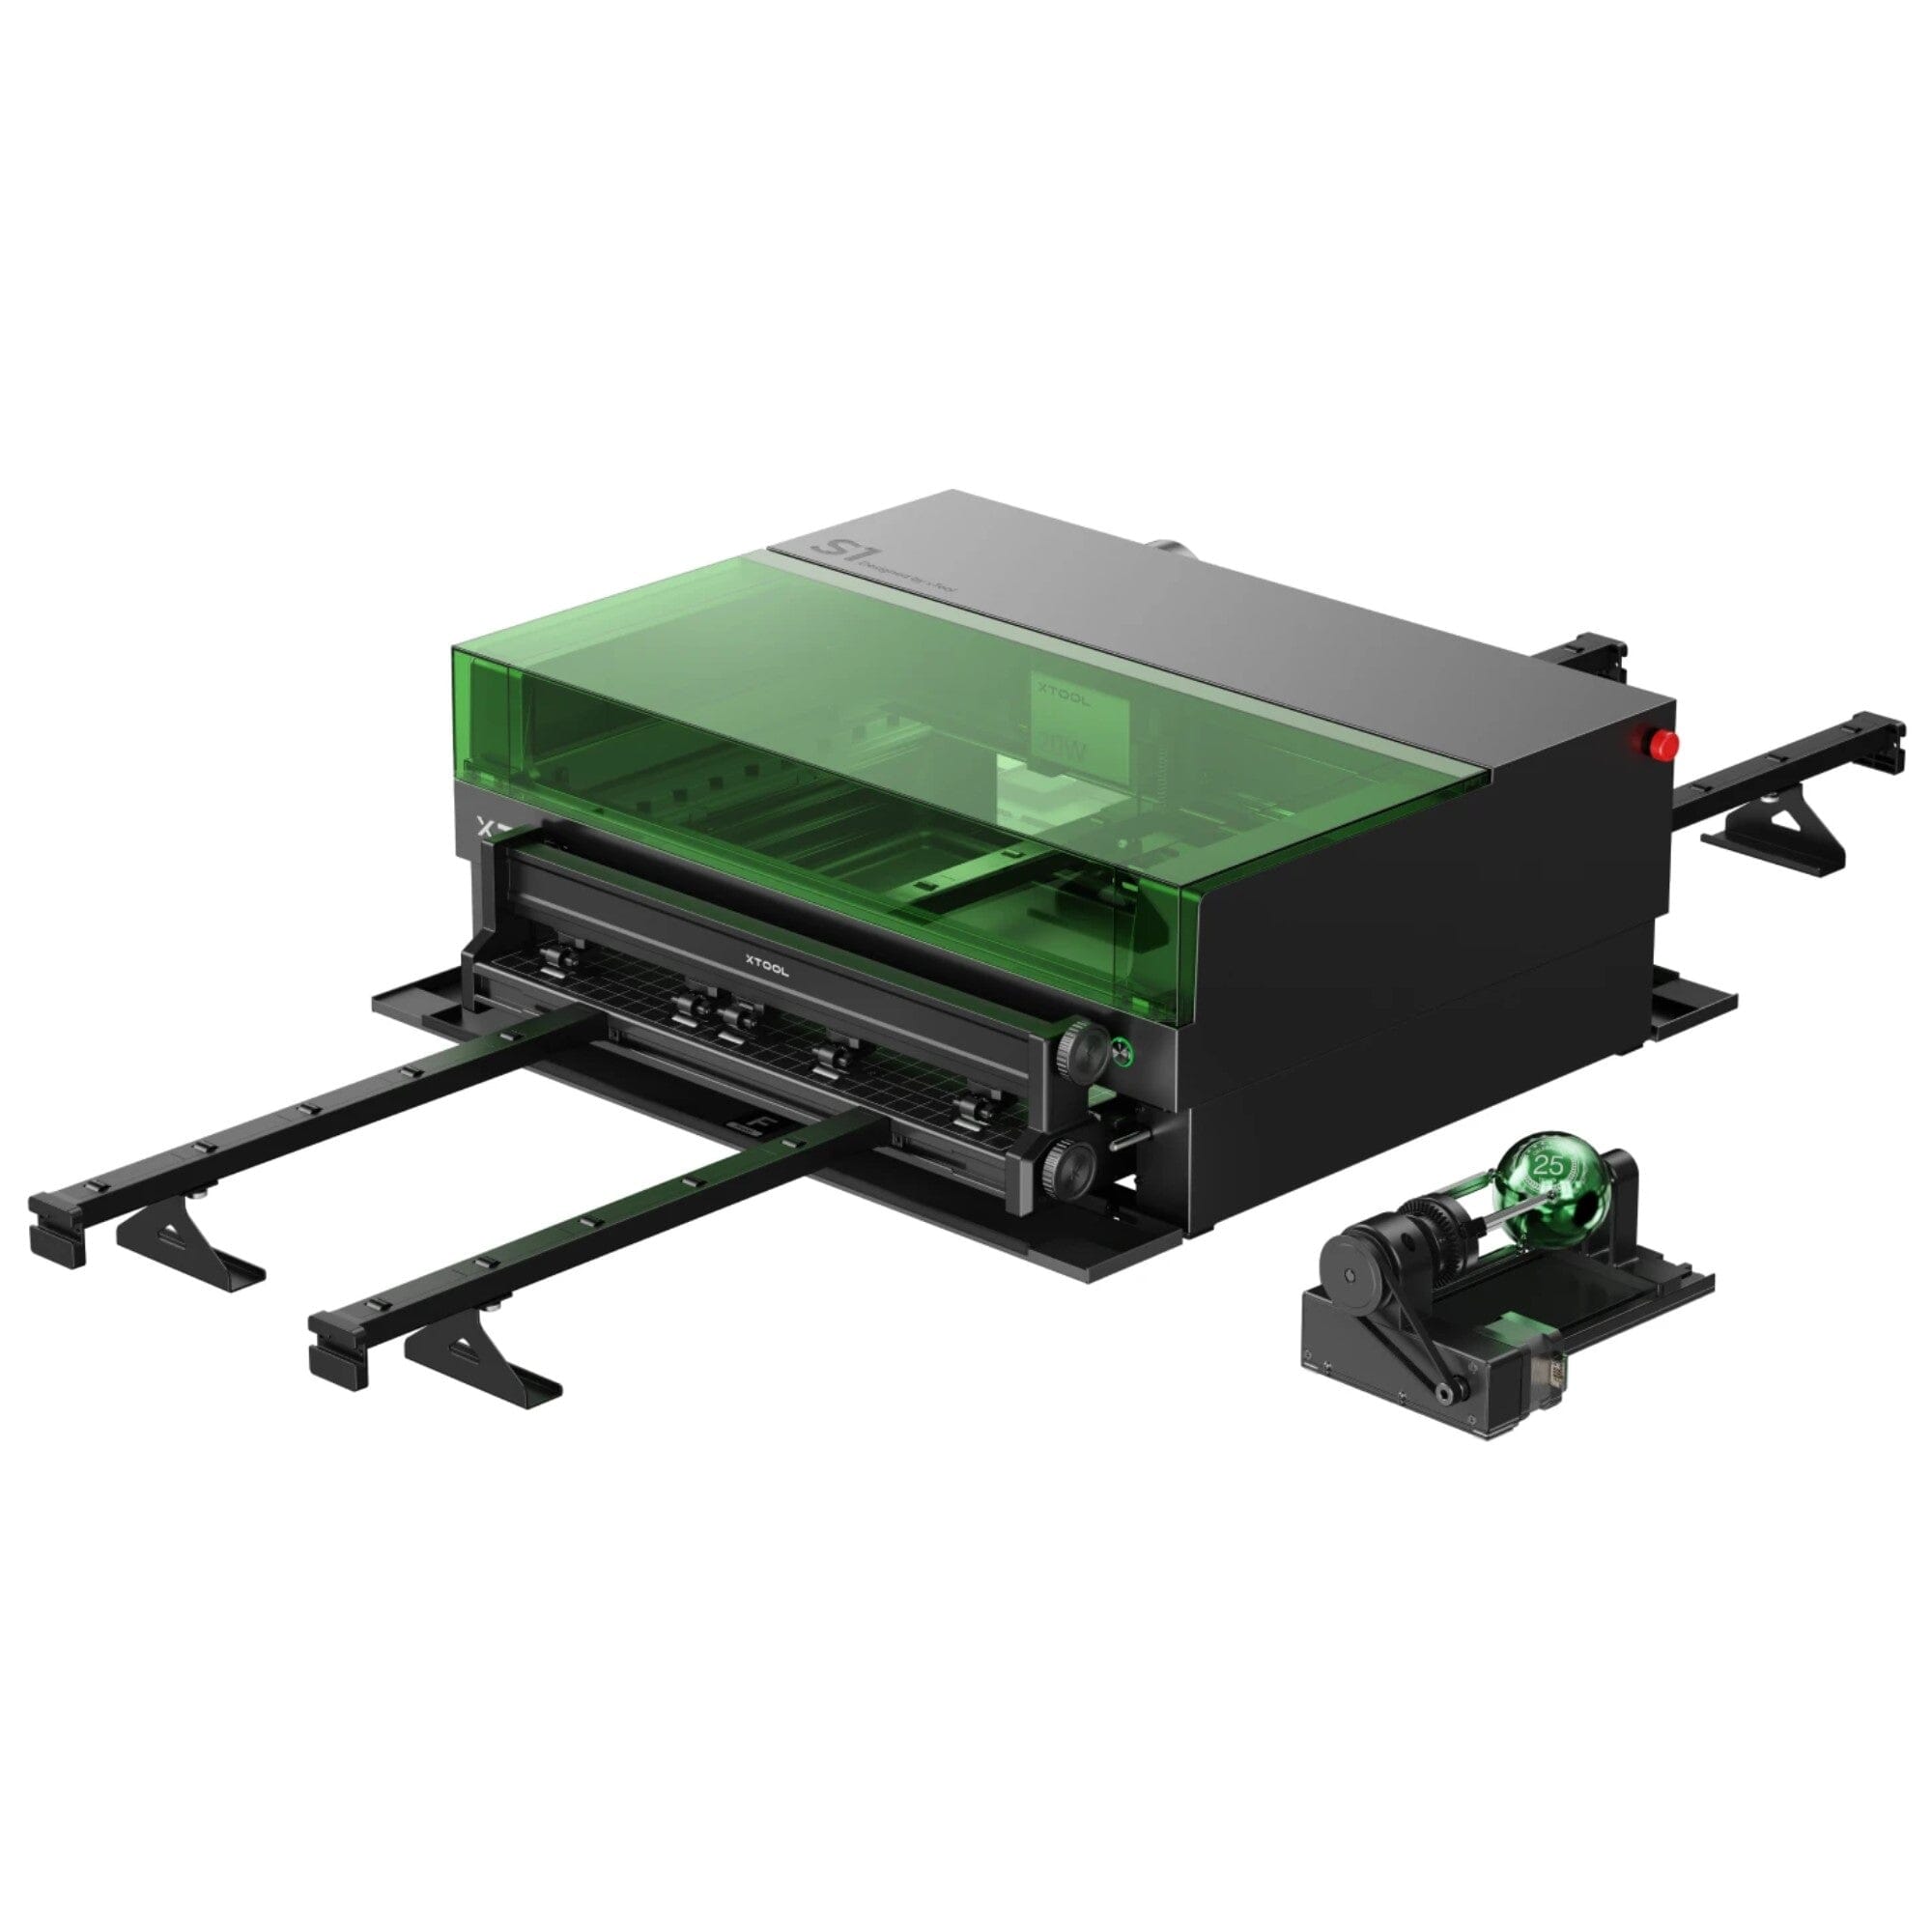 xTool S1 Laser Cutter & Engraver Machine Bundle w/ Rotary, Rail & Riser - 20W Diode Laser